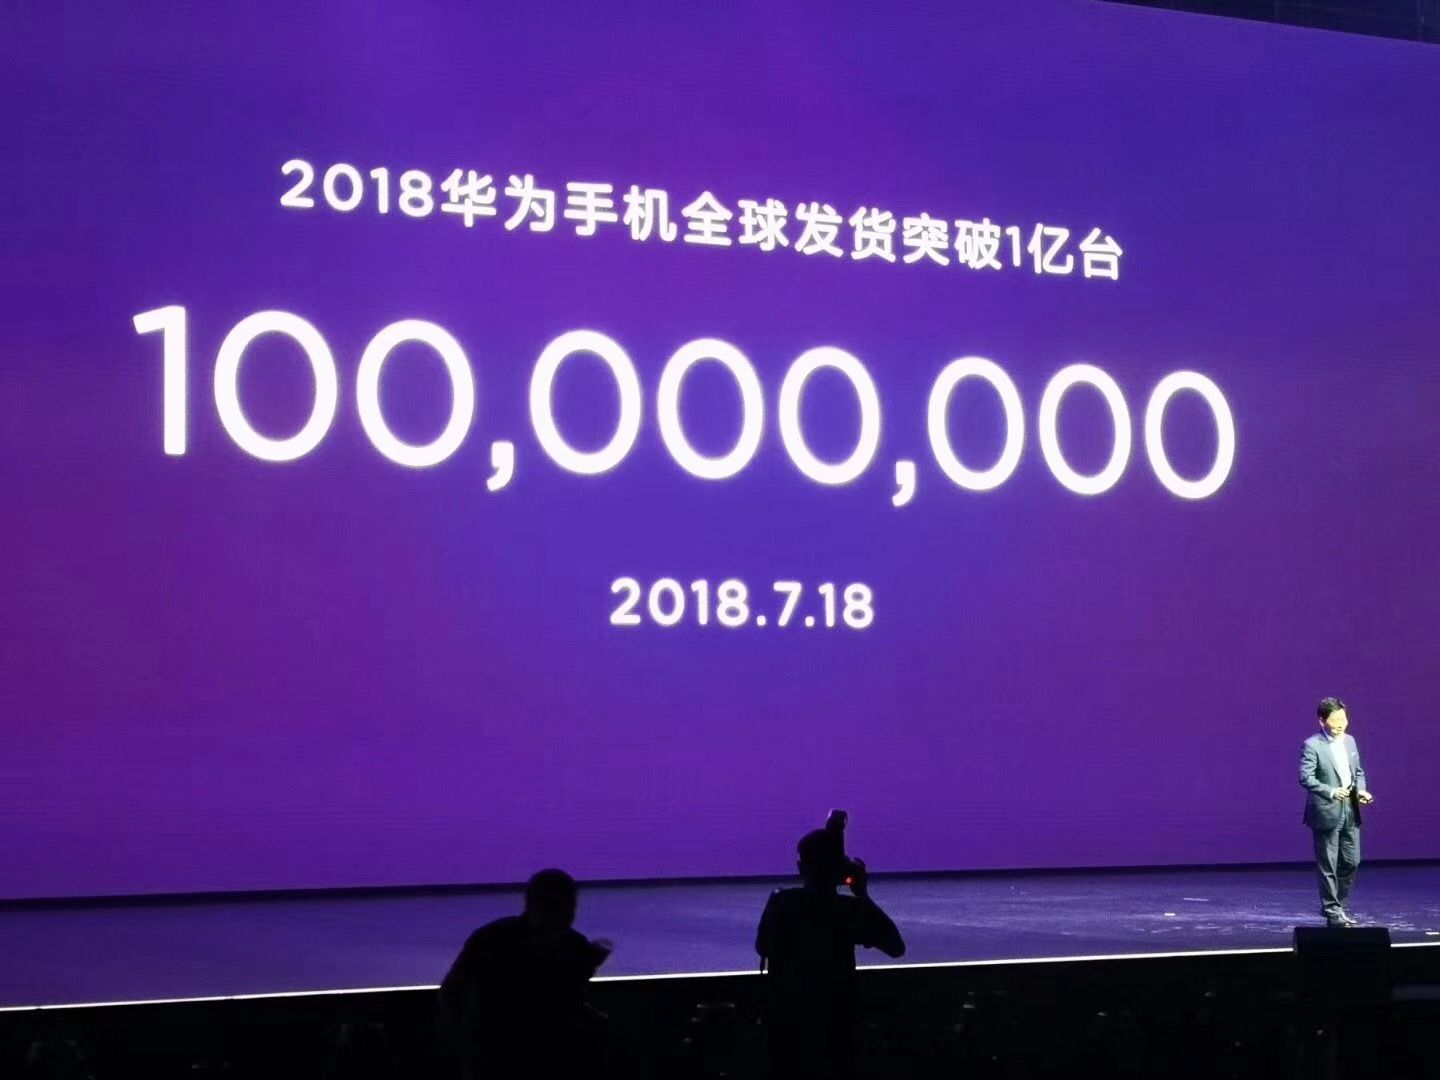 Huawei ยิ้ม 6 เดือนผ่าน ขายสมาร์ทโฟนไปแล้วกว่า 100 ล้านเครื่อง ทำสถิติใหม่ของบริษัท